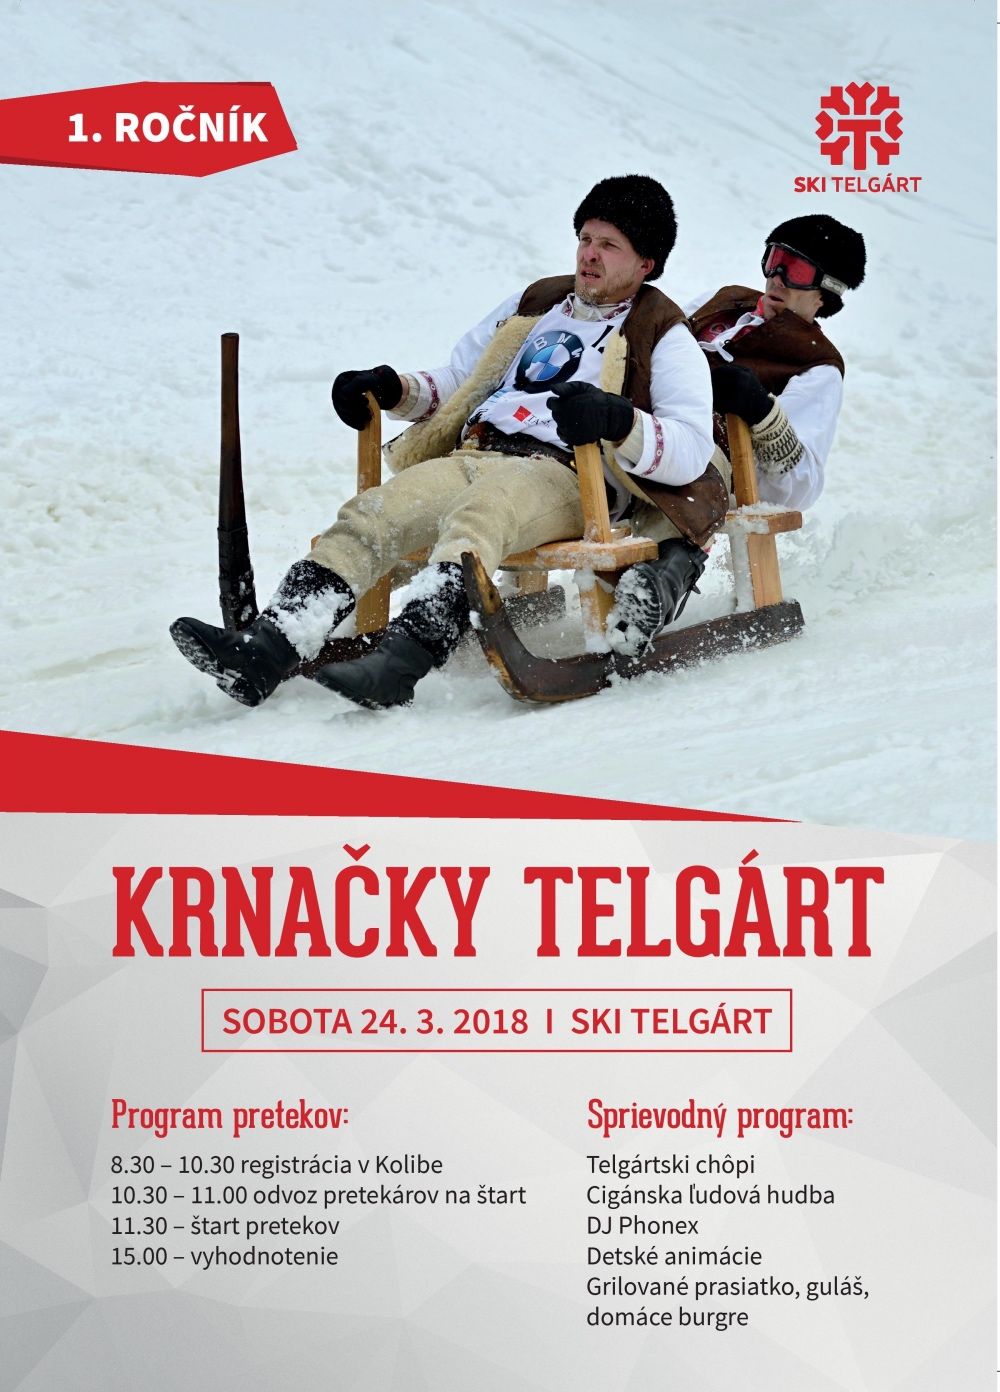 Krnaky Telgrt 2018 - 1. ronk